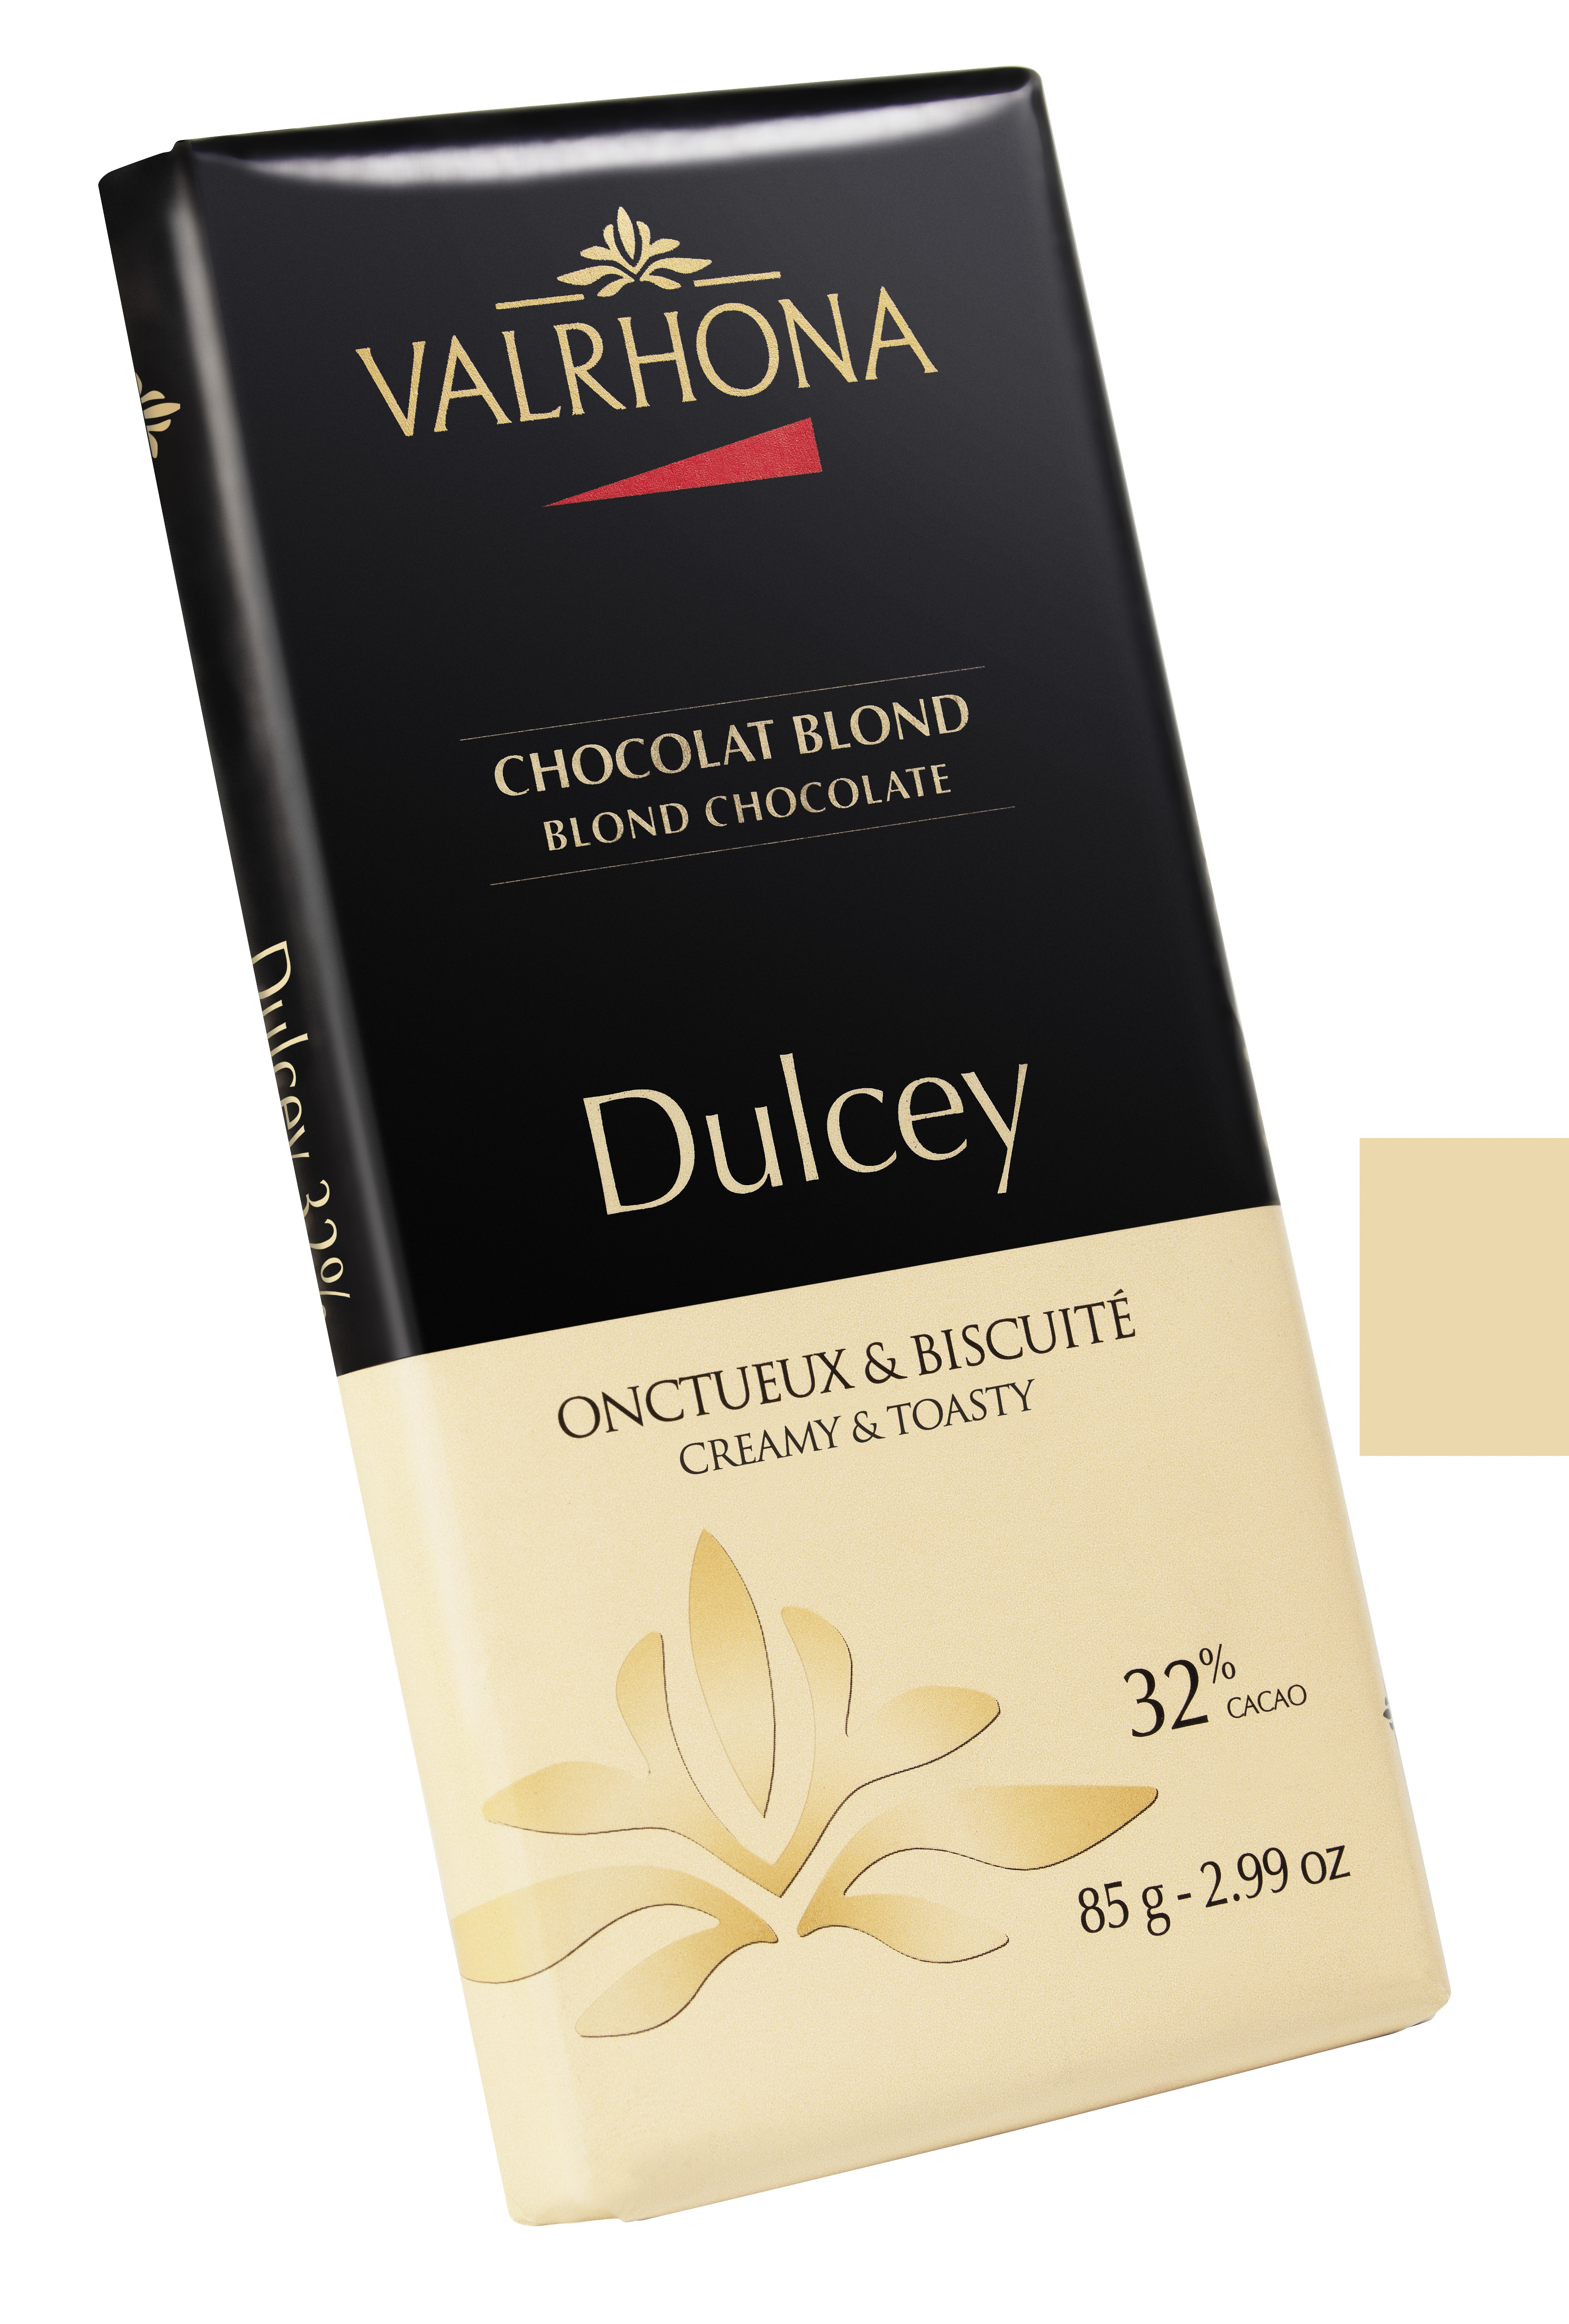 World's first' blond chocolate, claims Valrhona